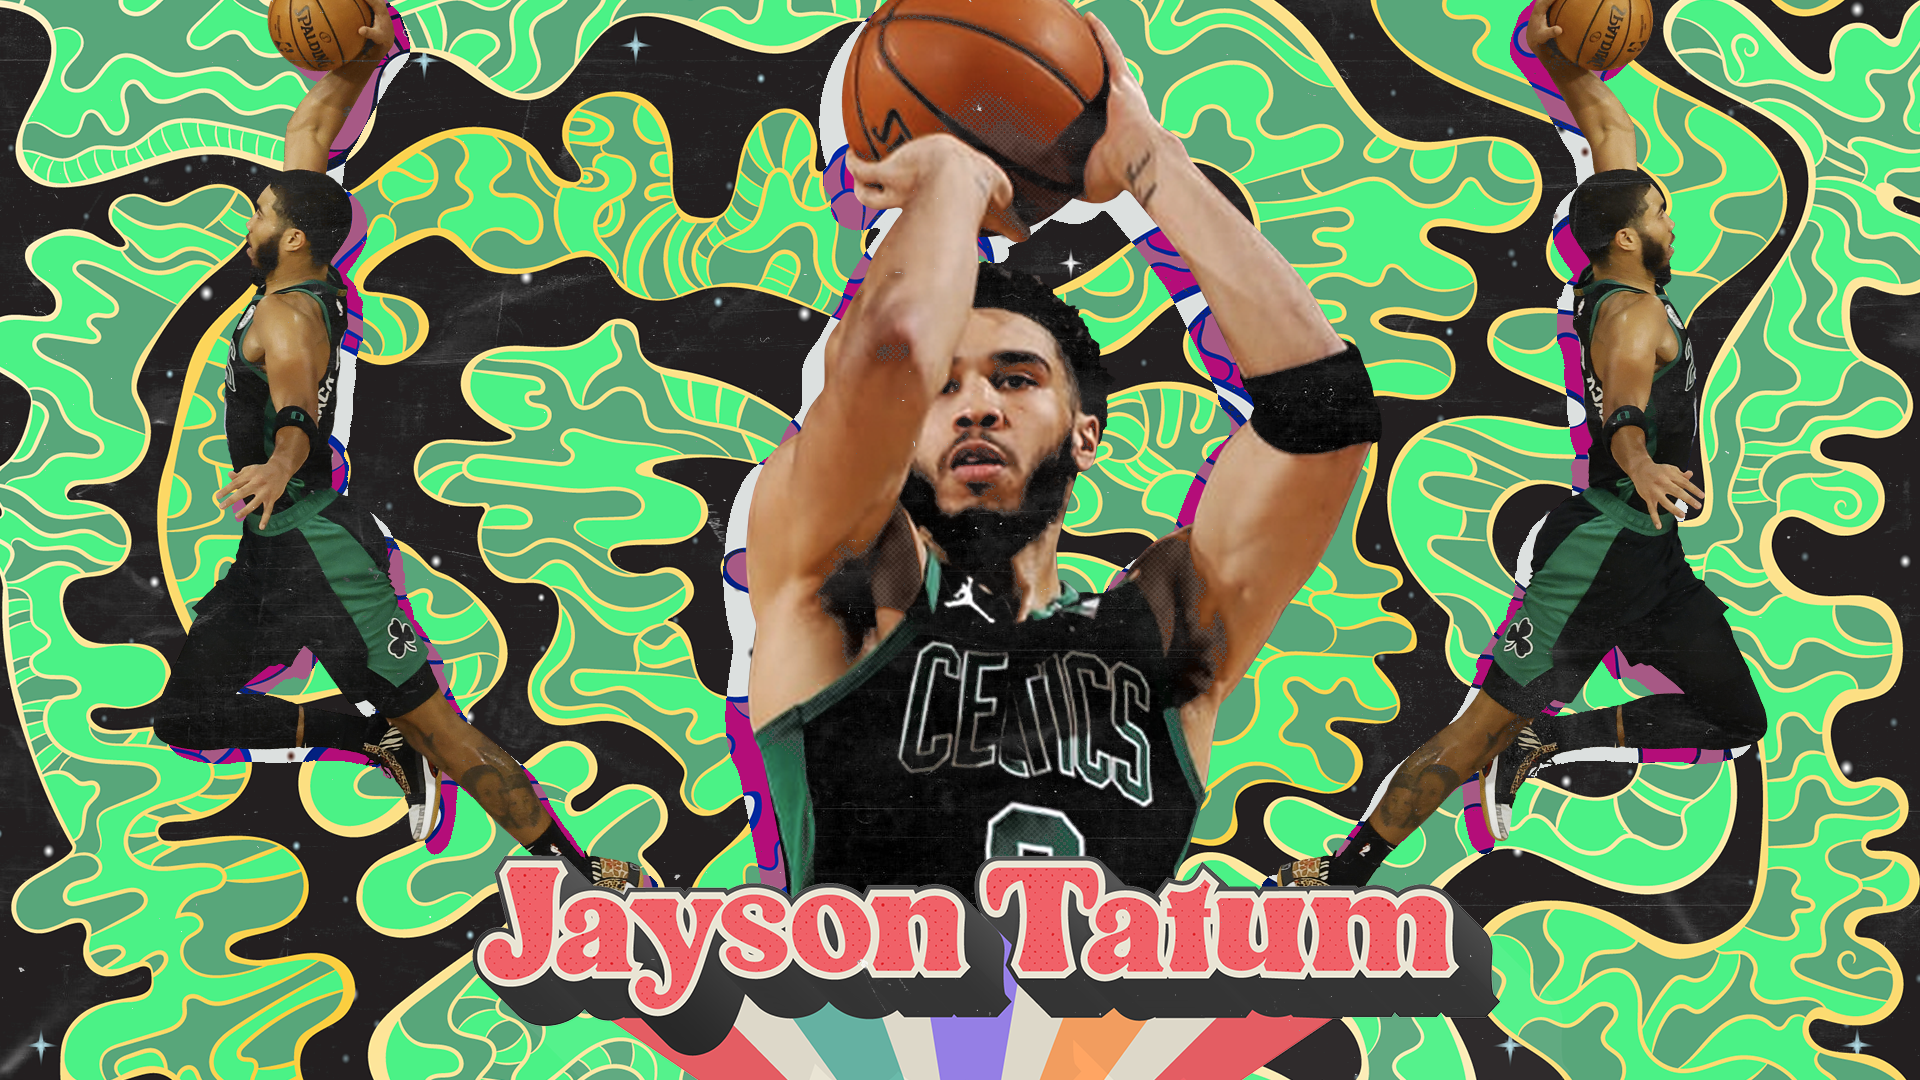 Wallpaper Wednesday: Jayson Tatum is the Future